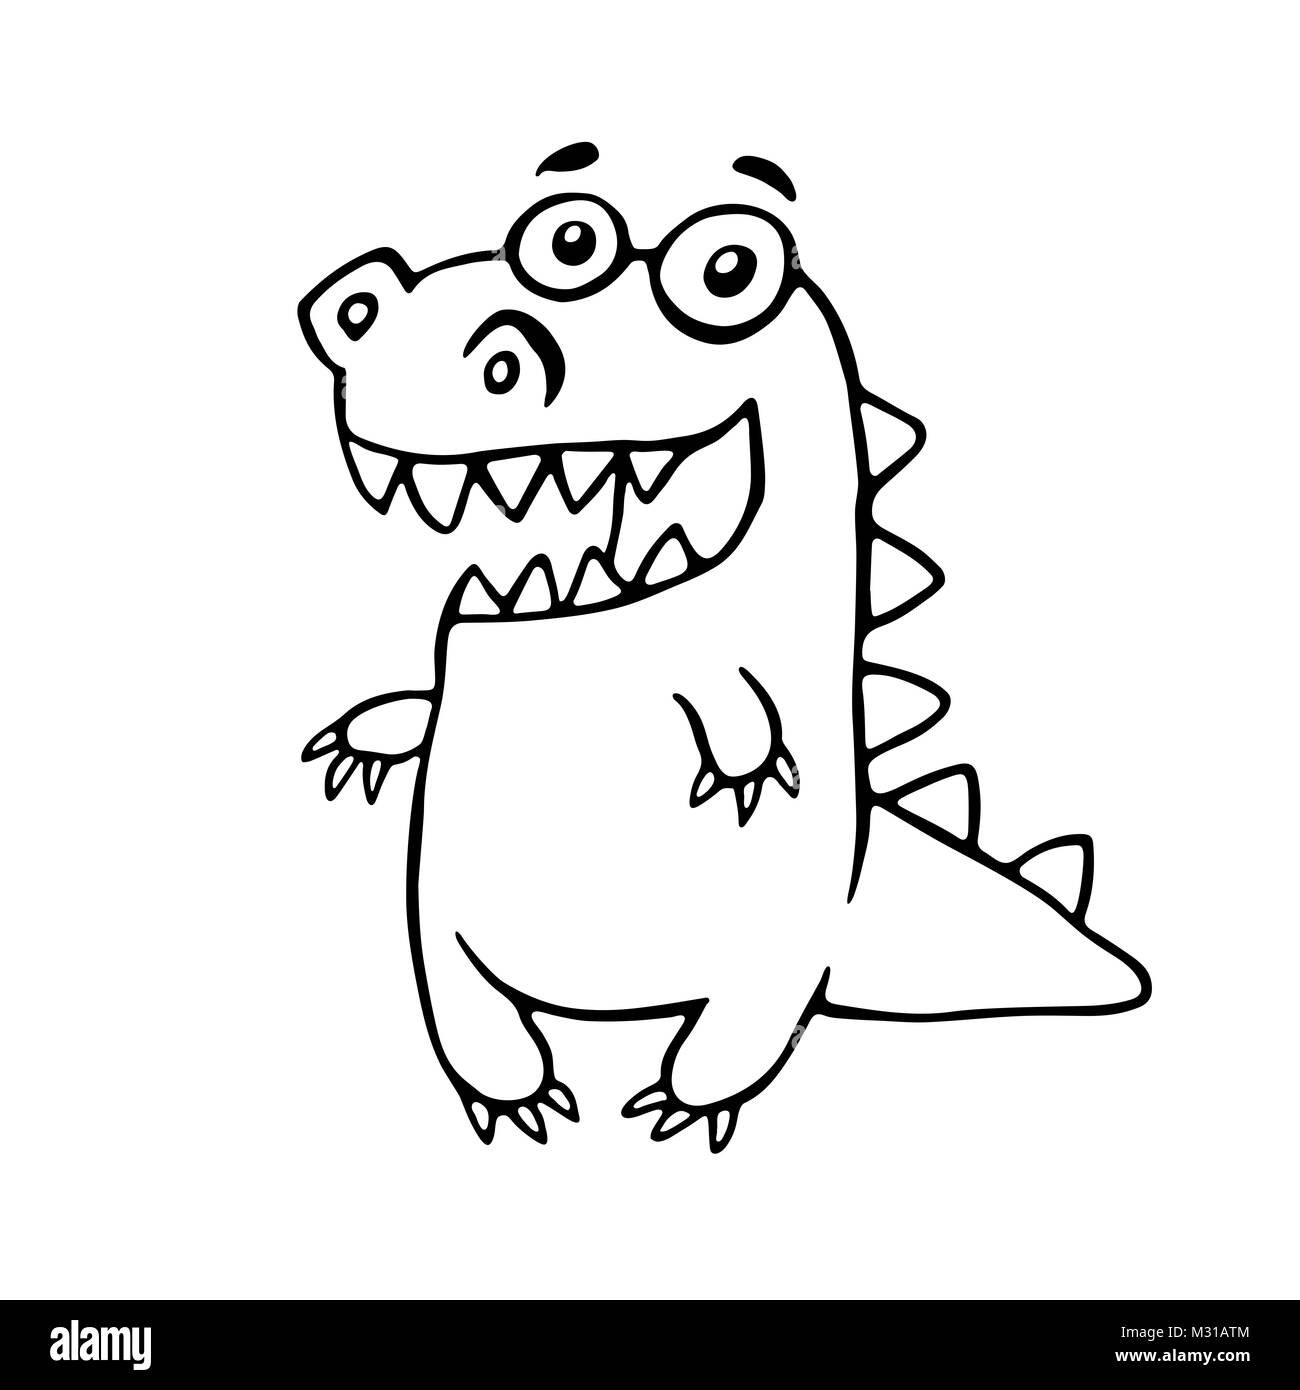 Cartoon friendly dragon illustration. Funny cute imaginary character Stock  Photo - Alamy